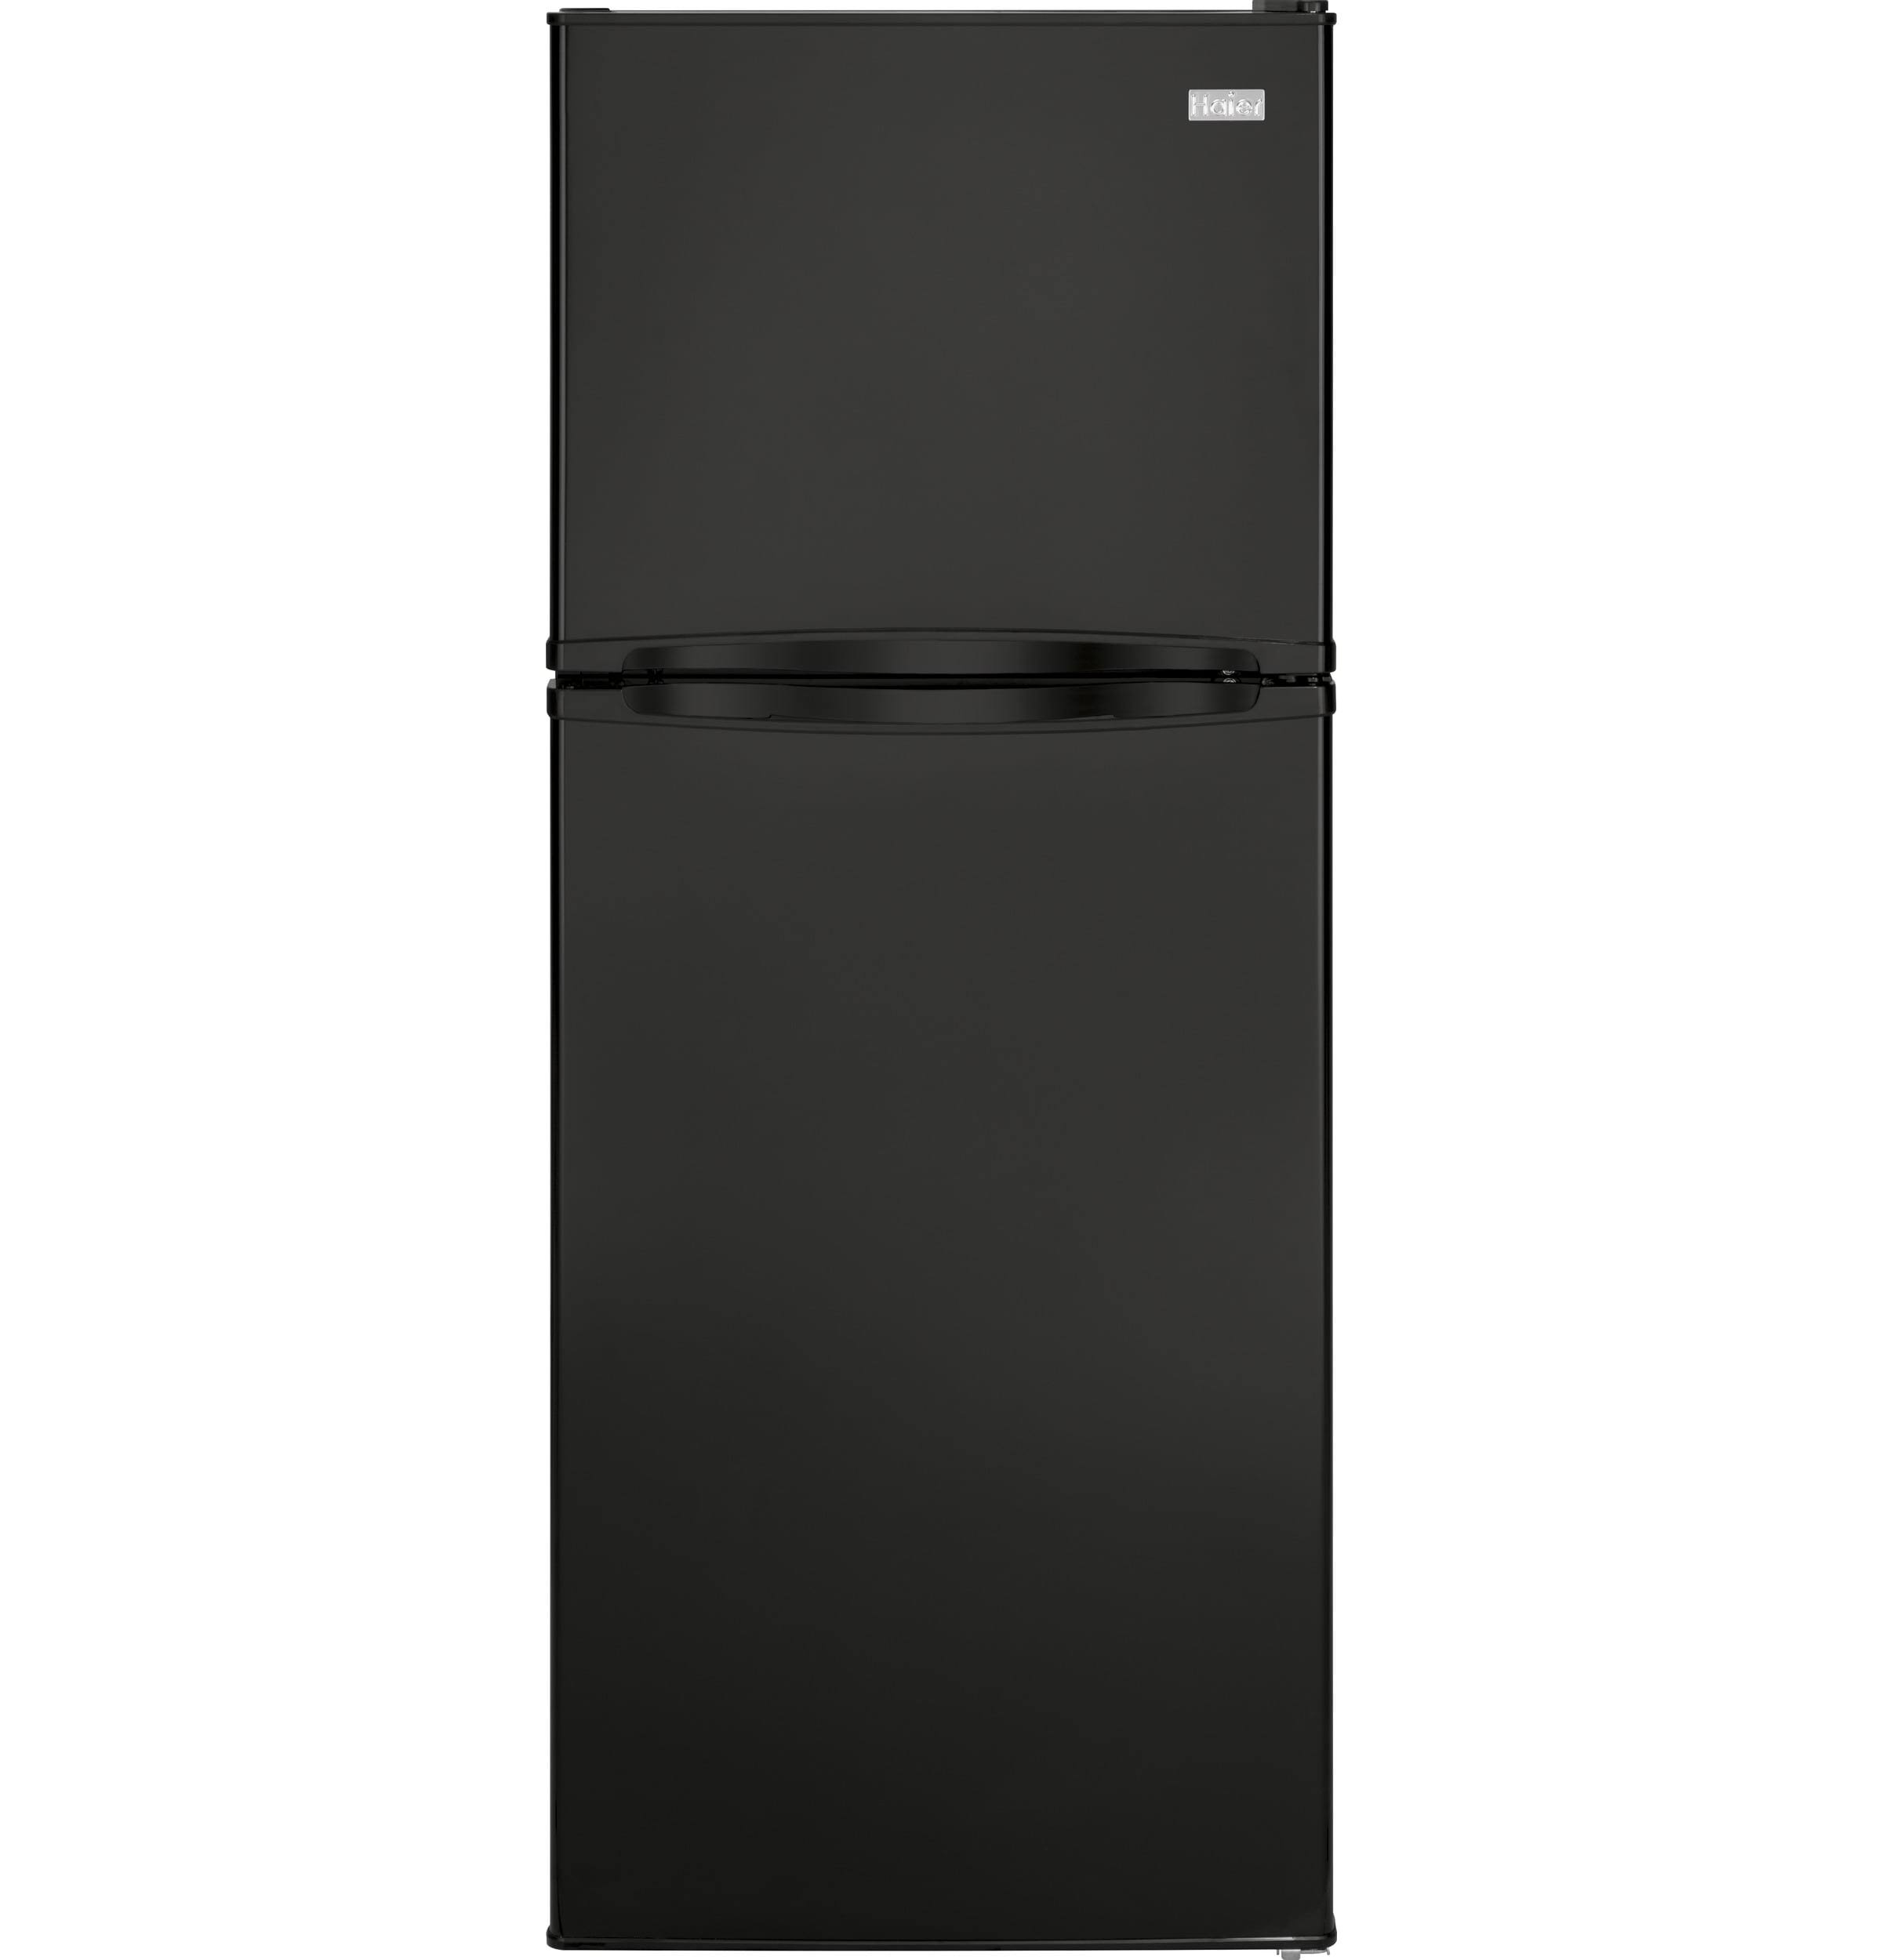 HA10TG21SB (24-inch, 9.8 cu. ft. Top Freezer Refrigerator)